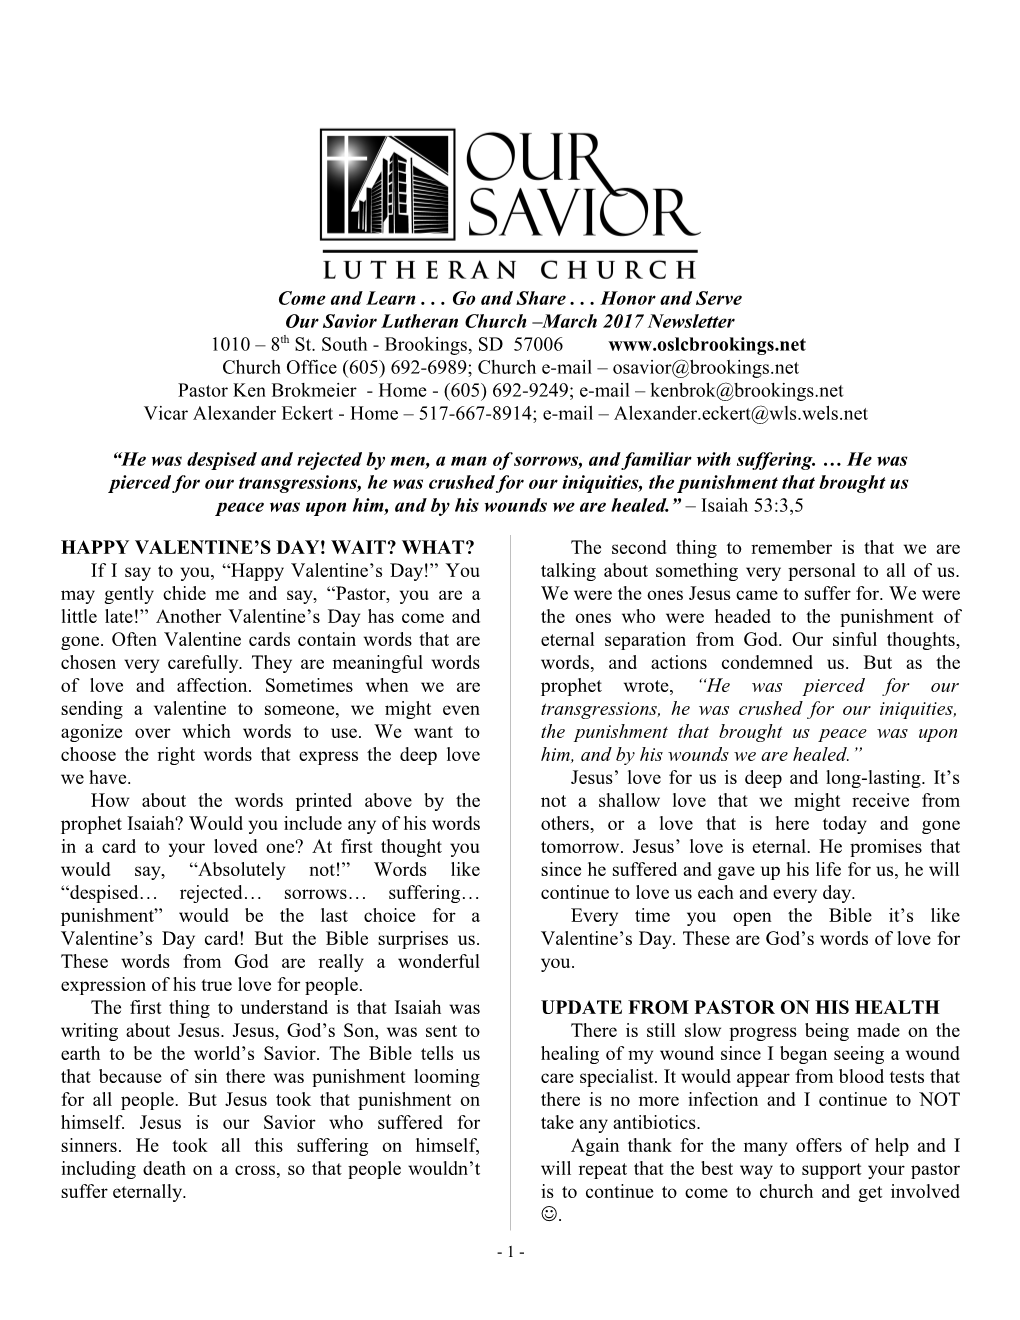 Our Savior Lutheran Church October 2000 Newsletter s1